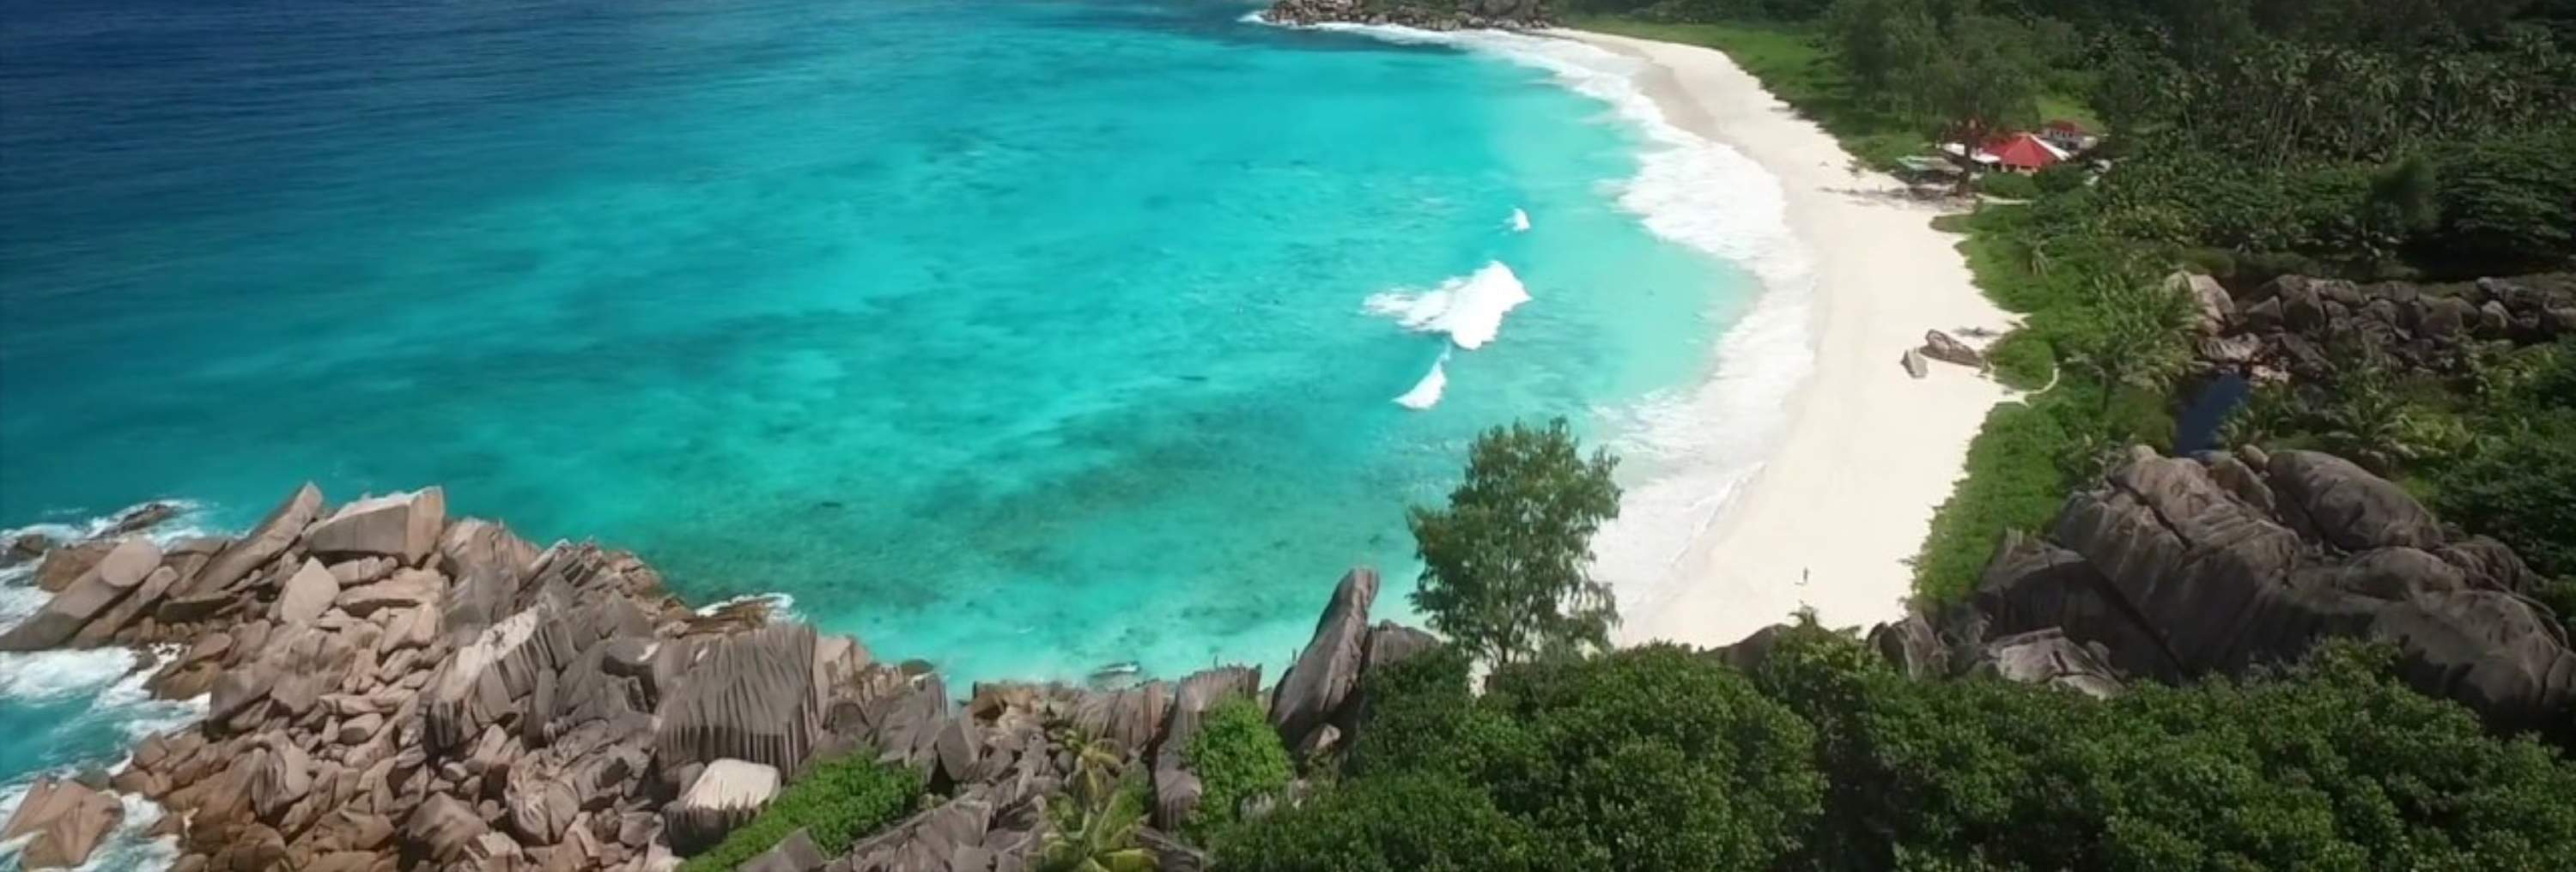 Granitic Islands, Seychelles: Charter Destination